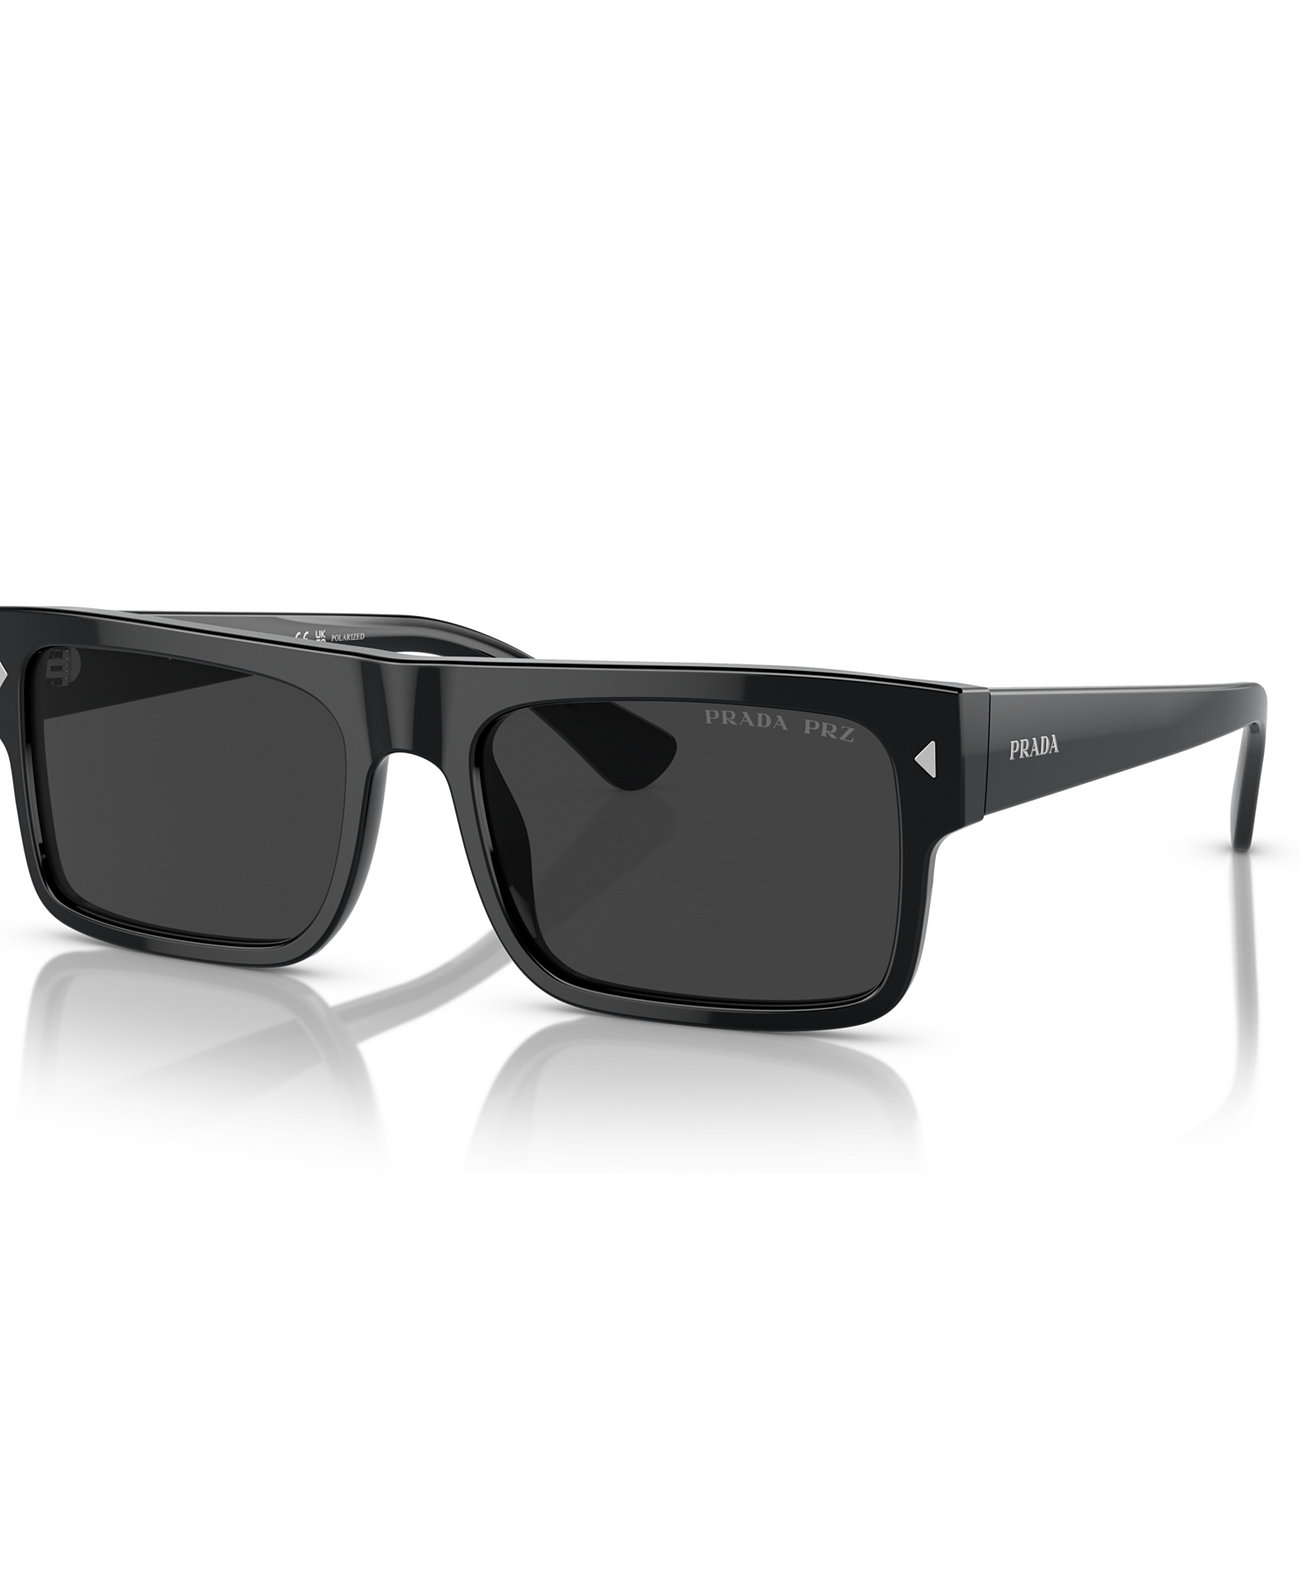 Men's Polarized Sunglasses, Polar PR A10S Prada